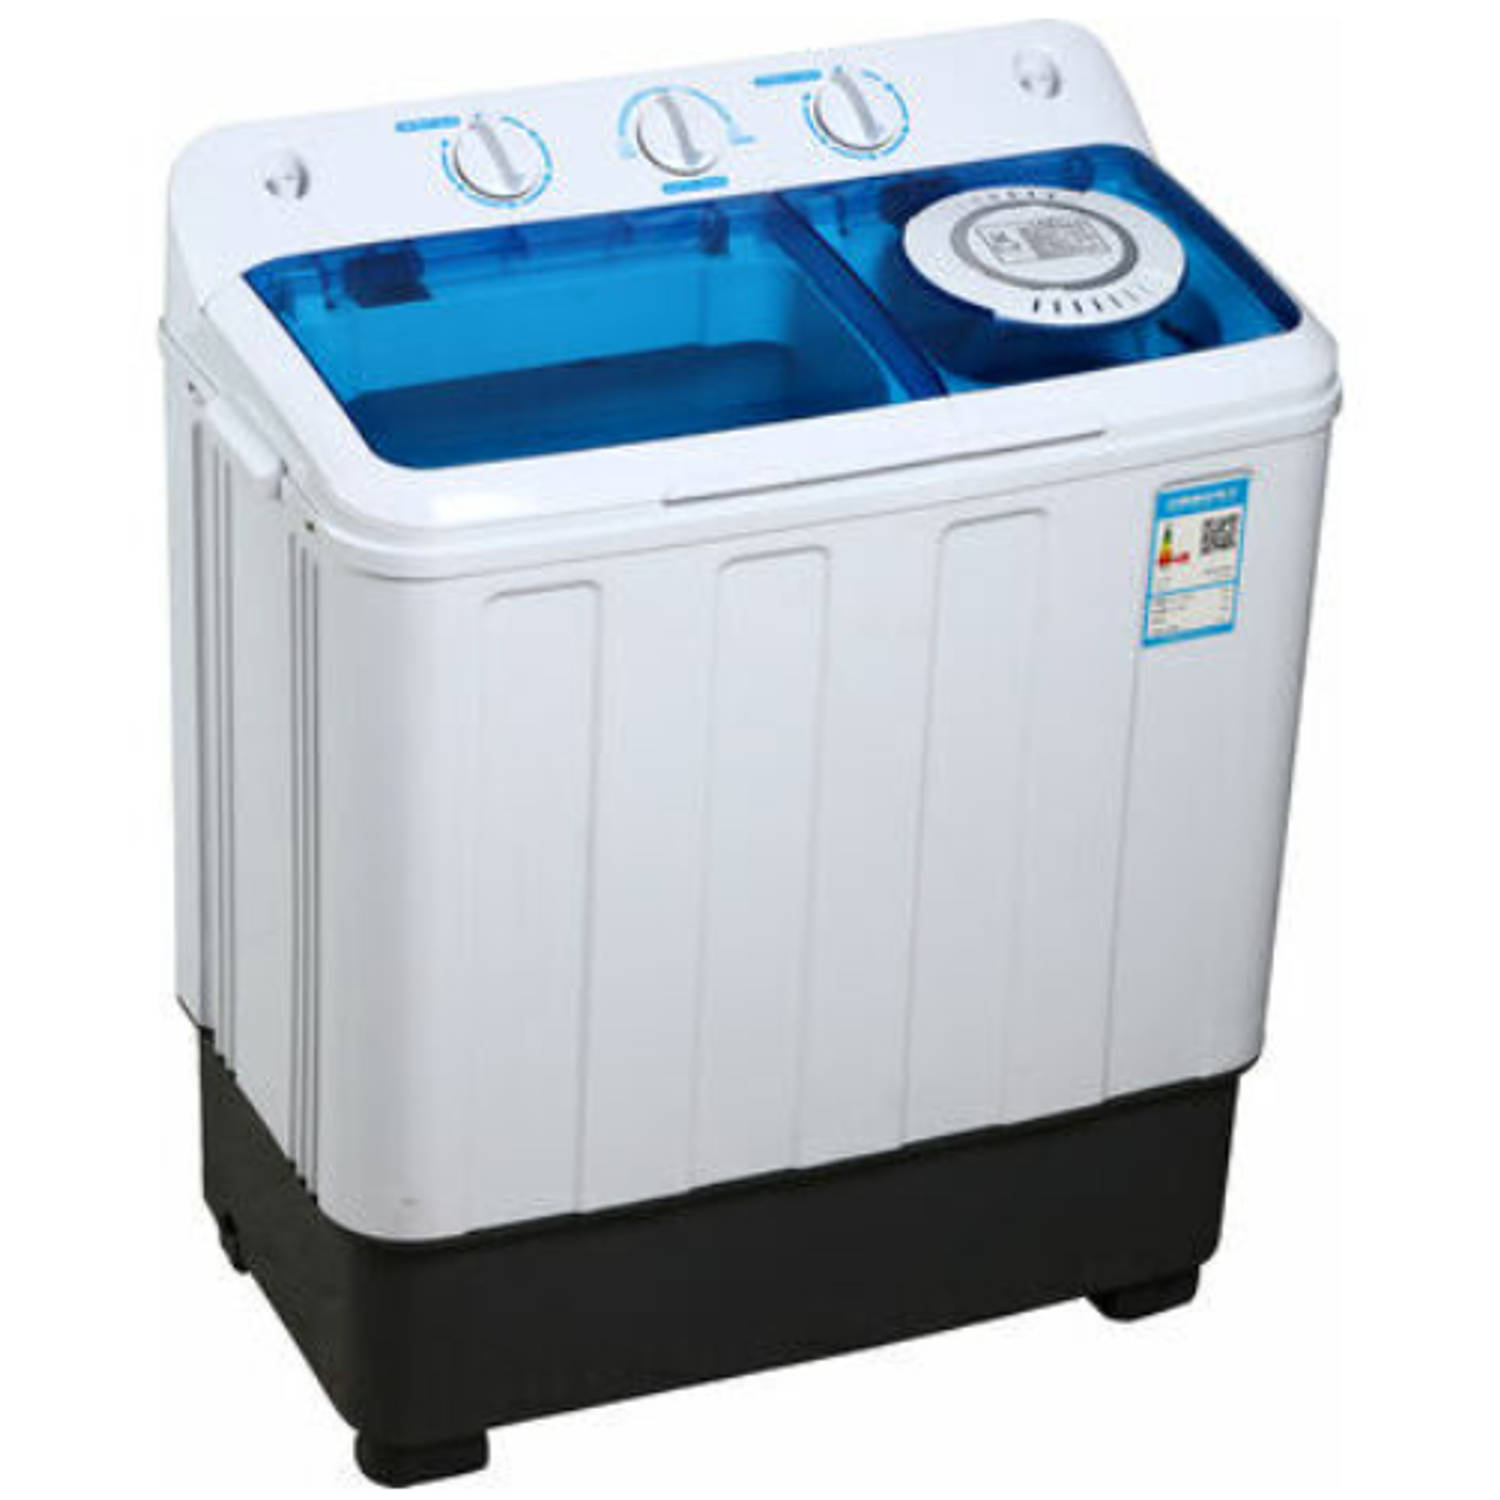 Brock XL camping wasmachine met dubbele trommel - 6,8Kg was - 5,0Kg centrifuge capaciteit